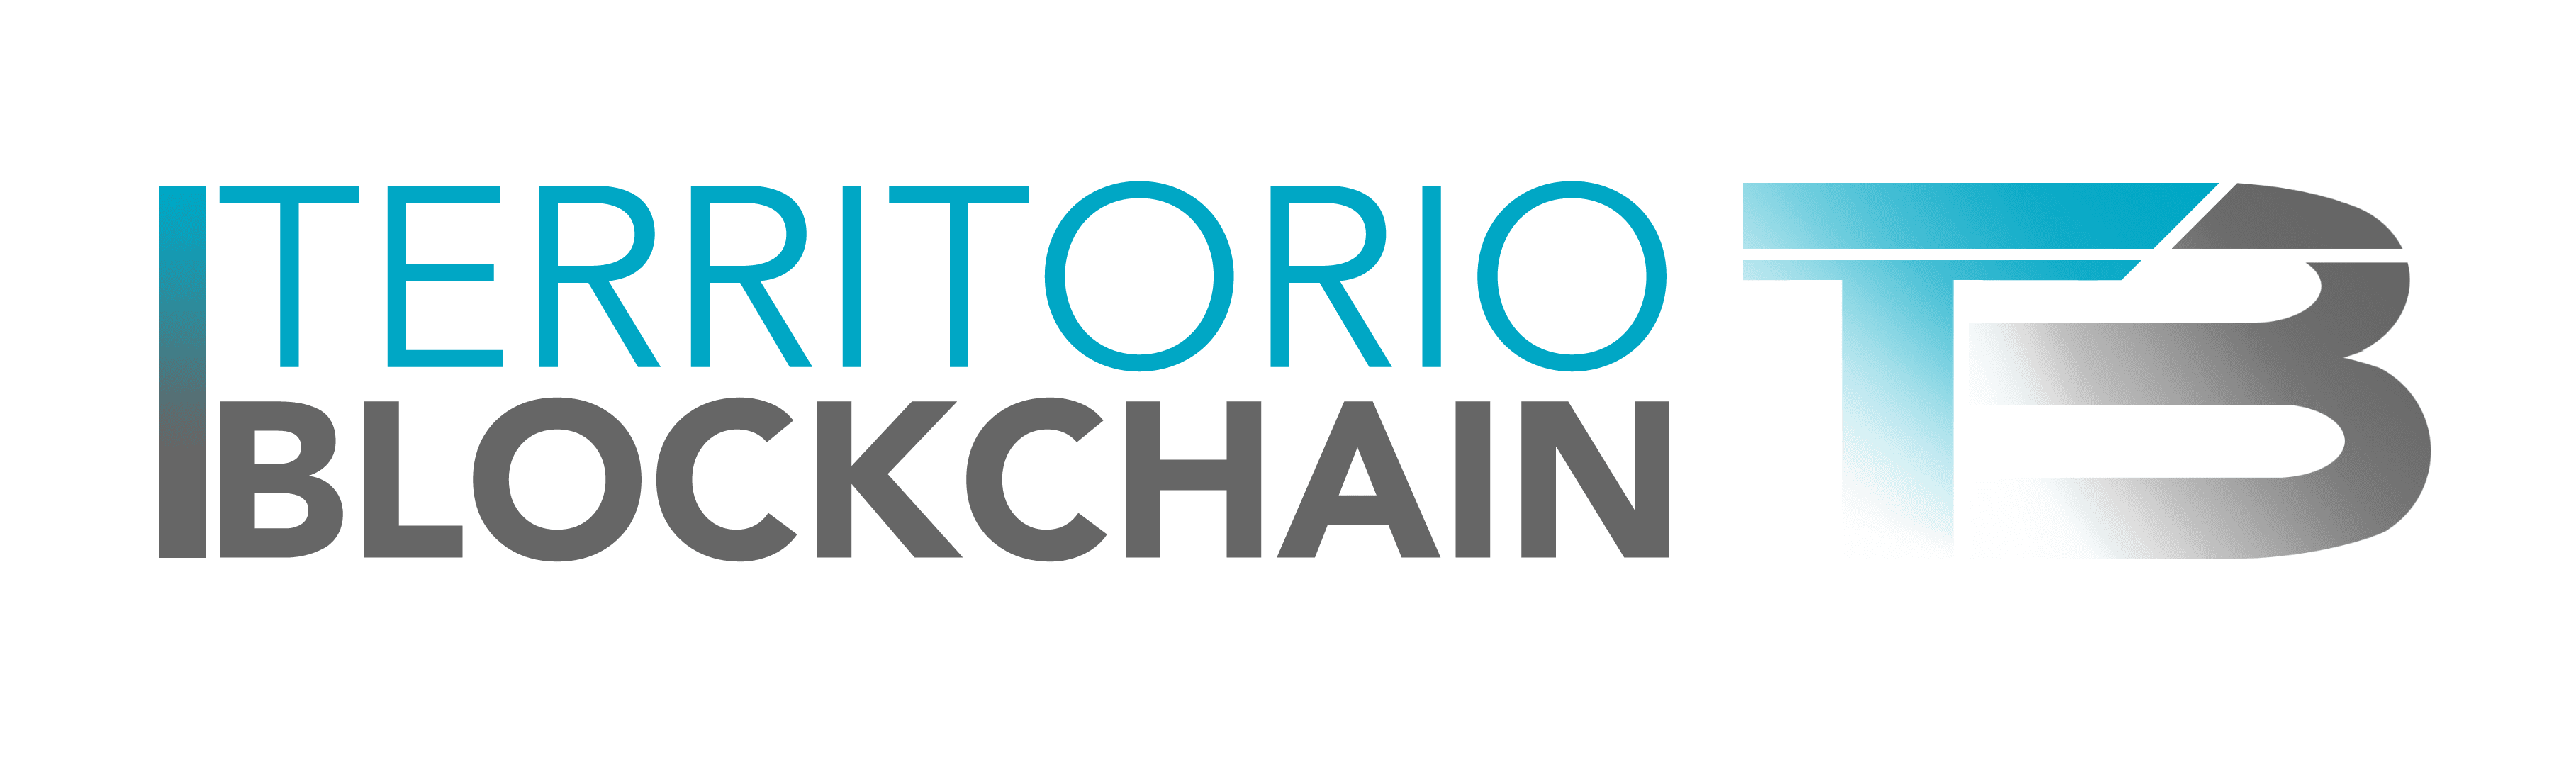 territorio-blockchain